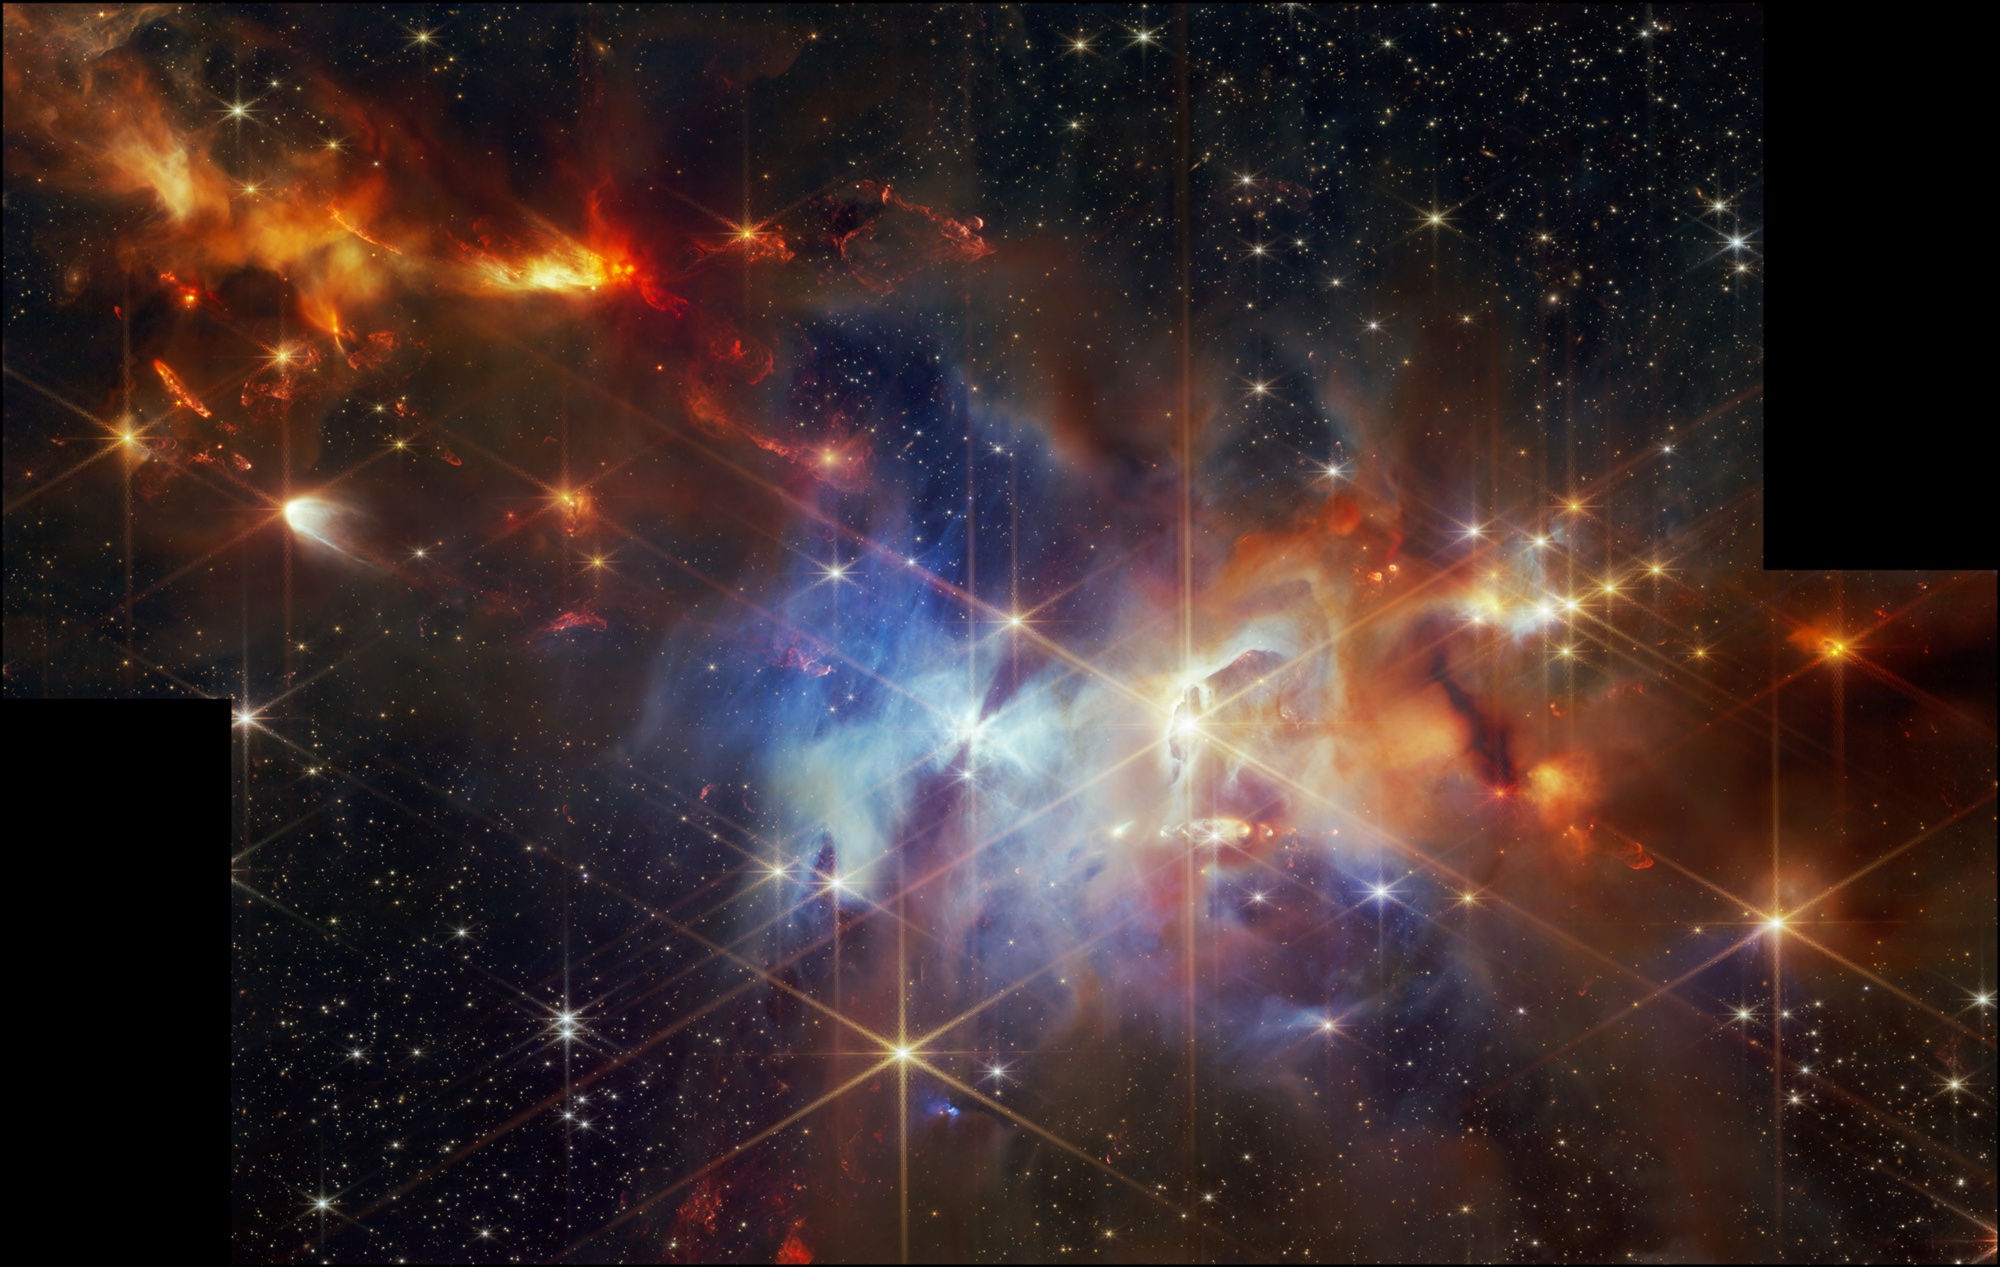 JWST image of the Serpens Nebula